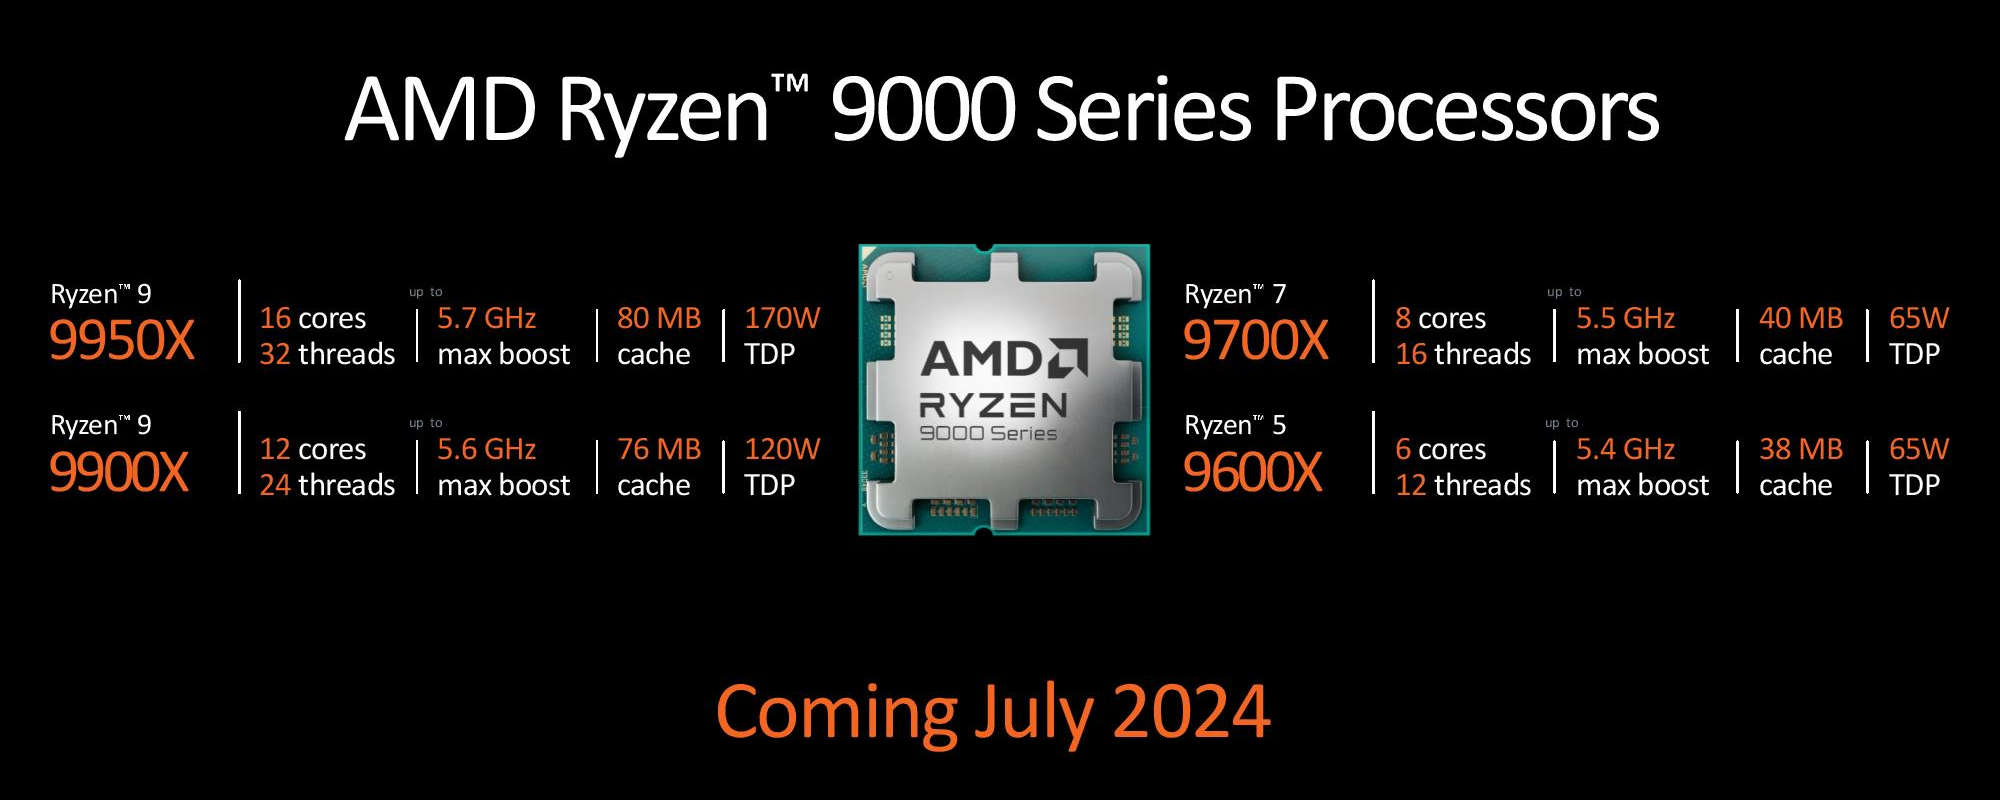 AMD-RYZEN-9000-2.jpg